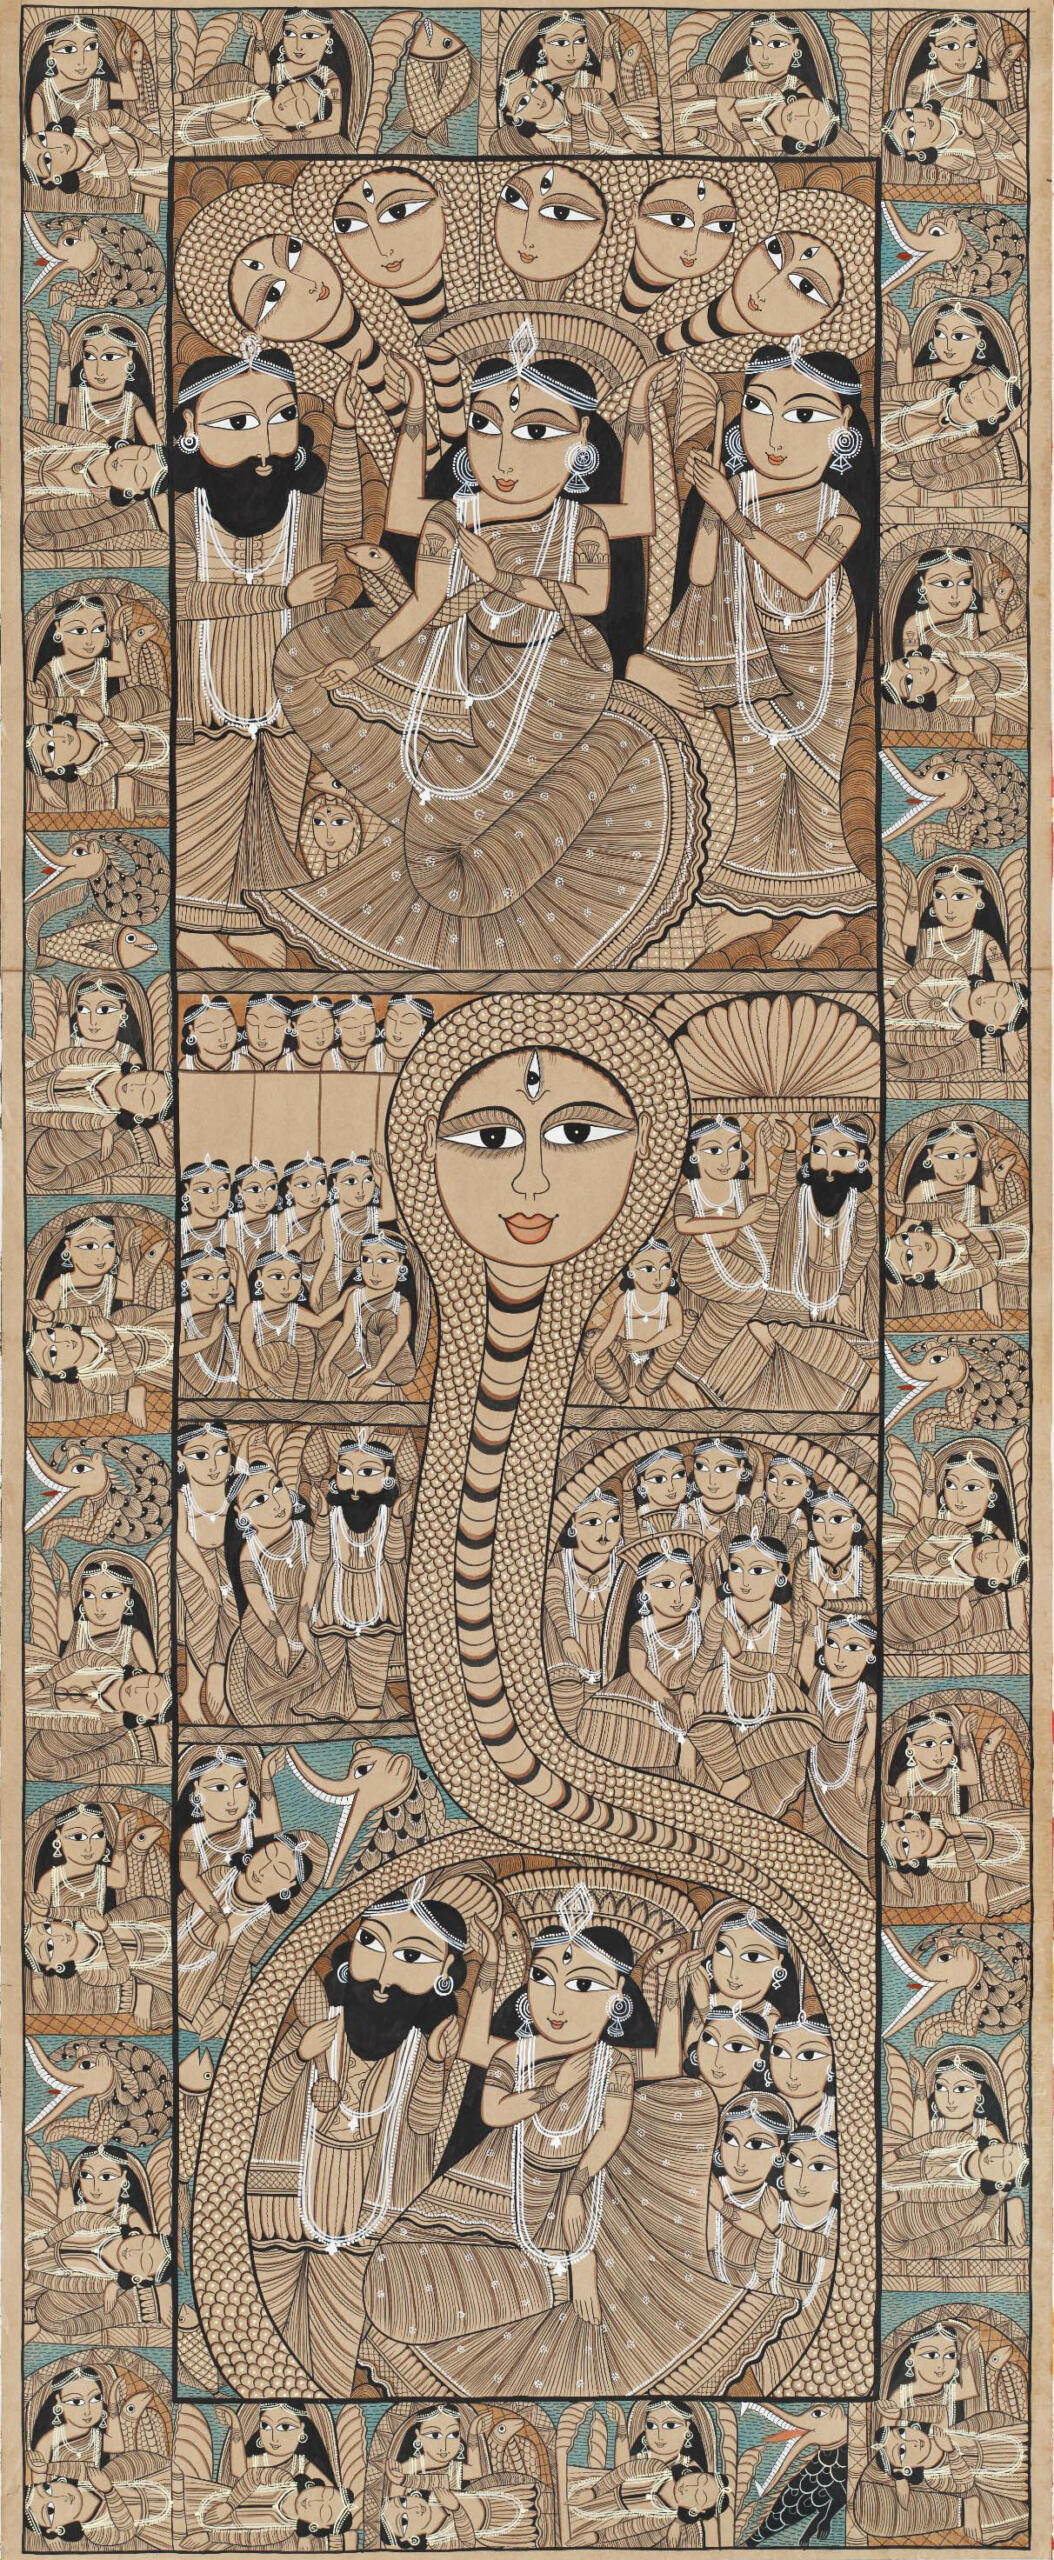 Miracle cure – Goddesses of health - Adivasi, Bahujan, Dalit, epidemic, featured, Goddess, Hadaksha Mata, healing, Jesus Christ, Kalighat, Mata ni Pachedi, Mother Mary, Olabibi, Oladevi, pandemic, Shitala Devi